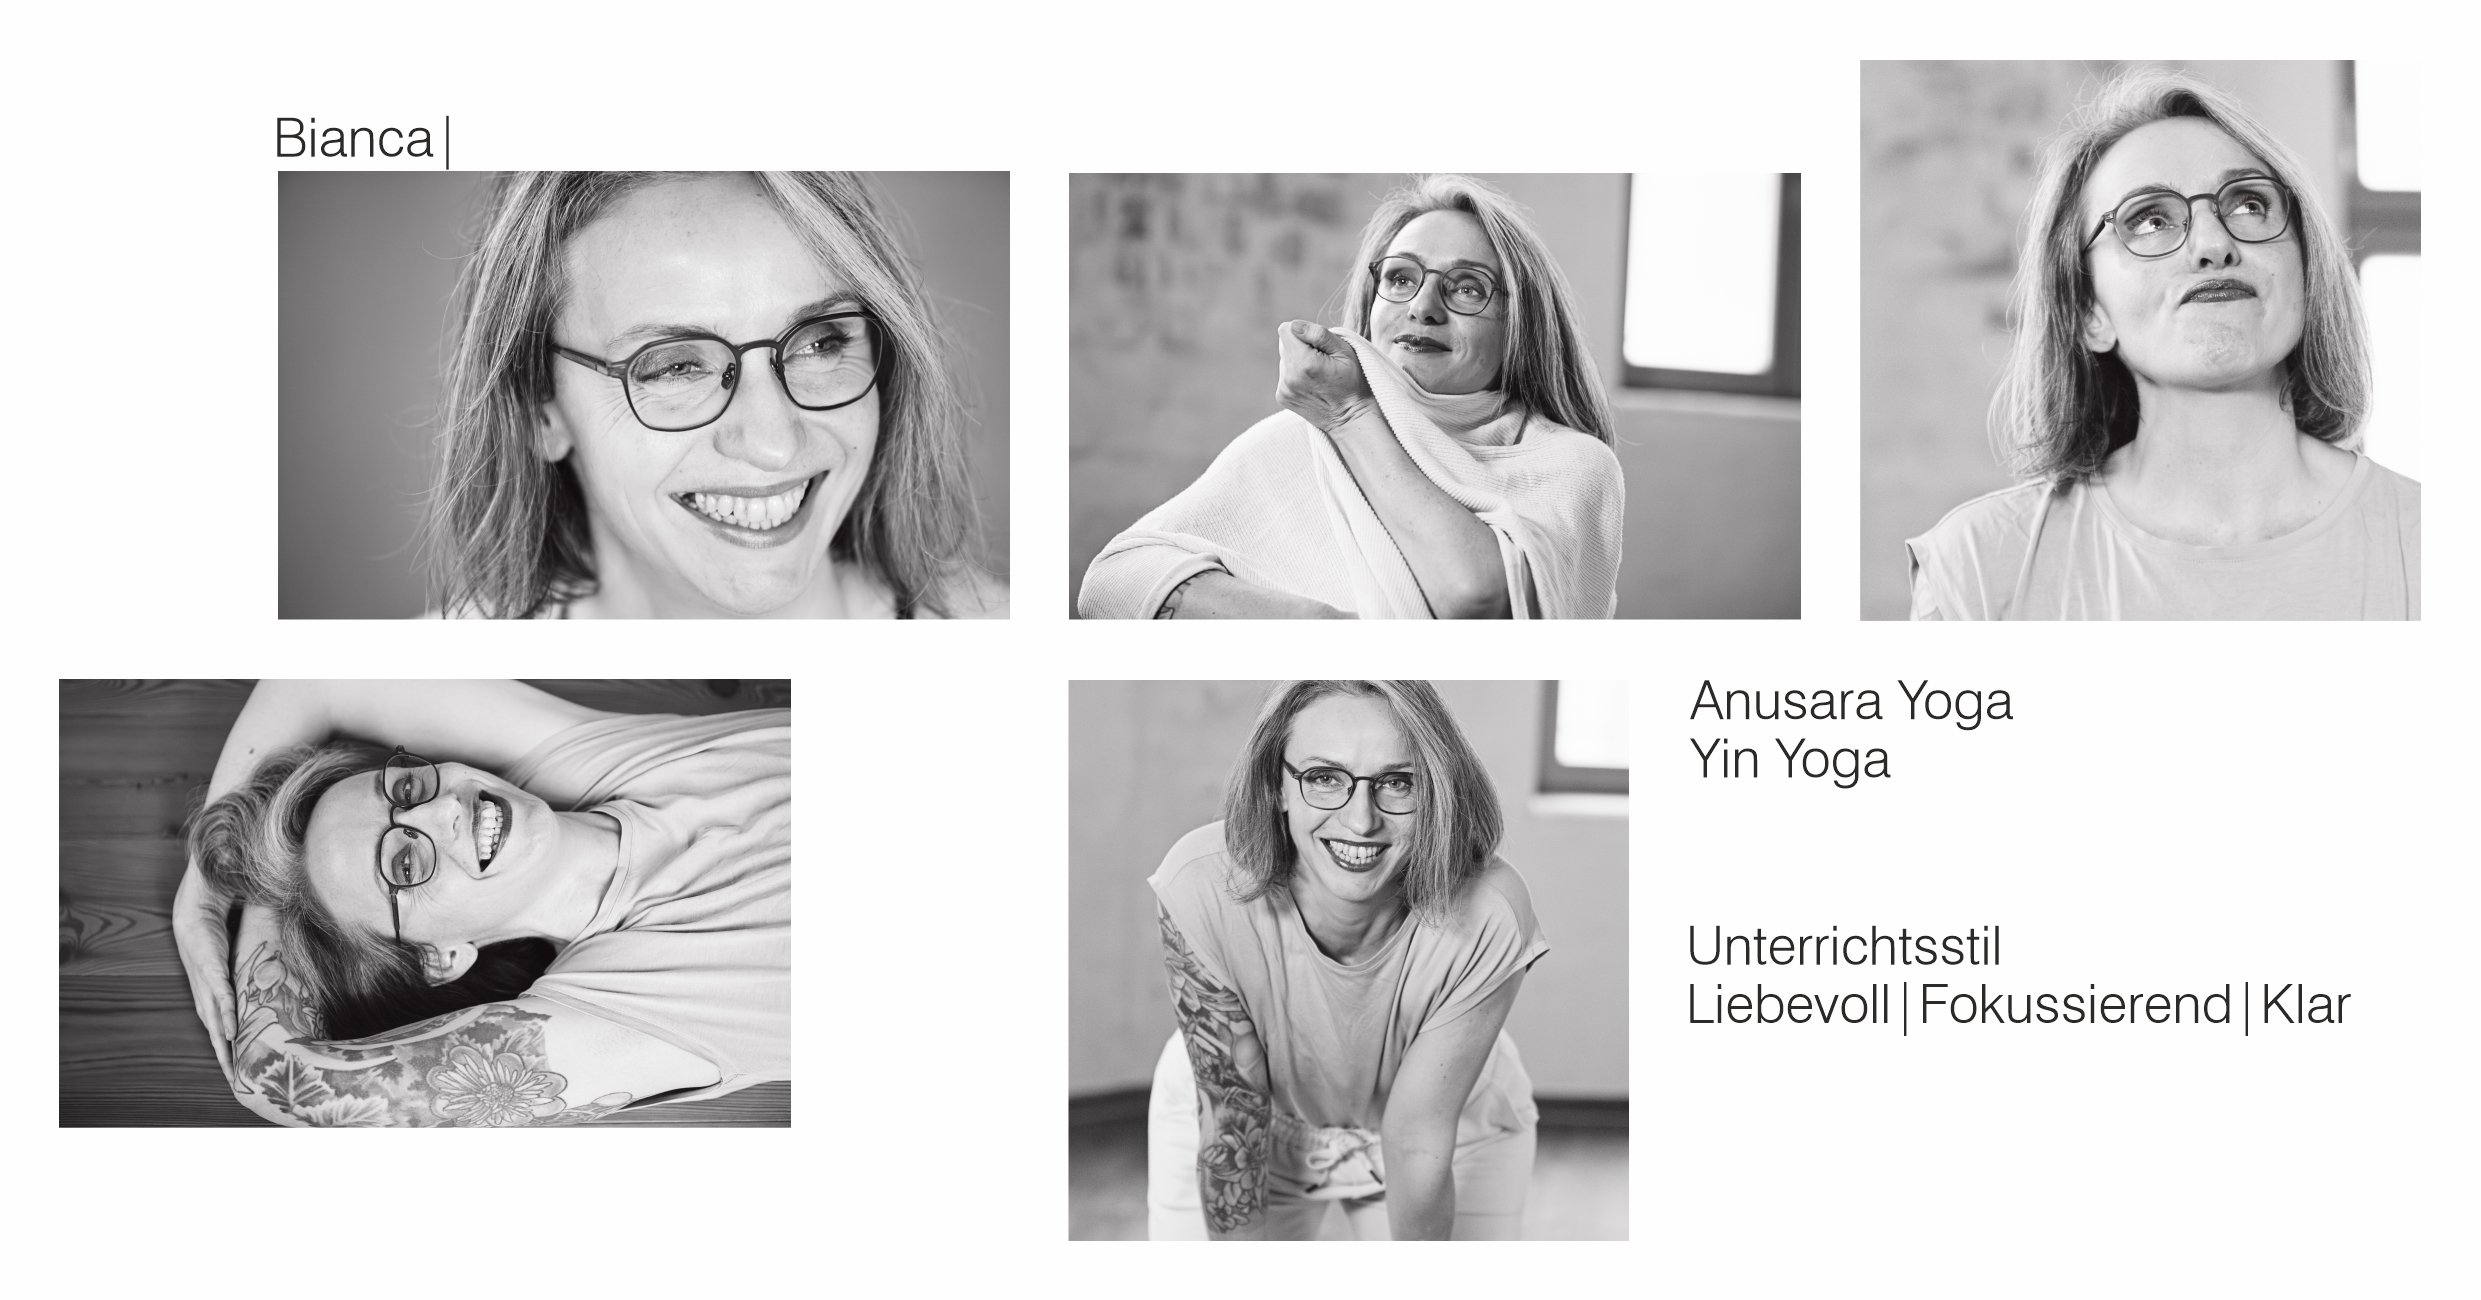 Ute Stephan Yoga Studio Plagwitz, Bianca Wilmsmaan, Anusara Yoga.jpg